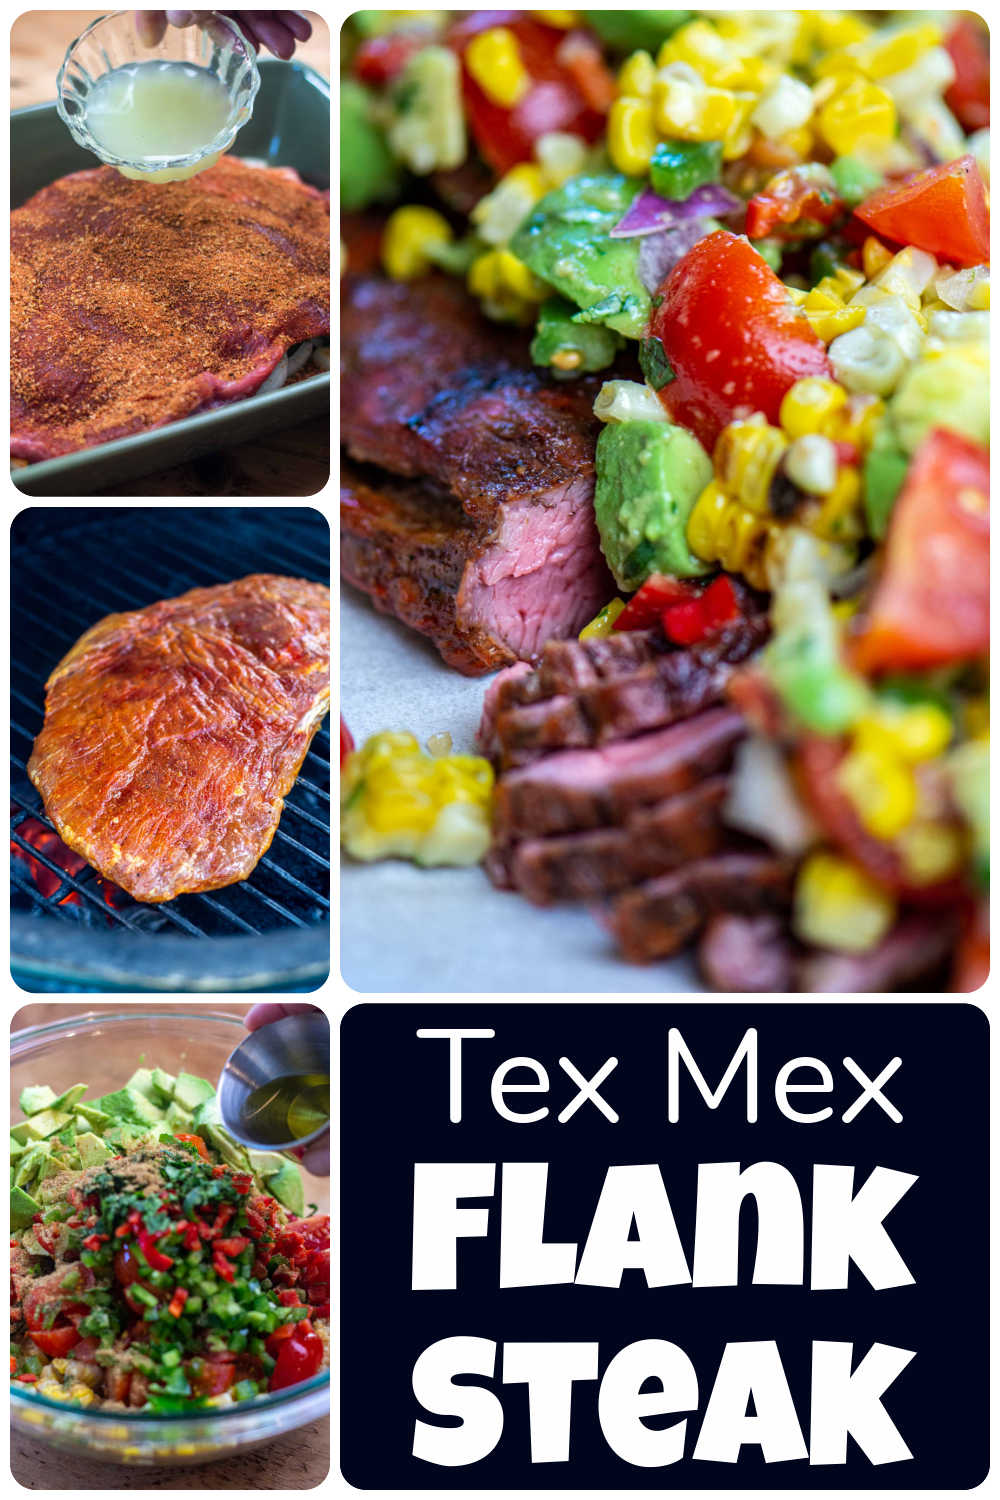 Grilled Tex Mex Flank Steak with Avocado Corn Salsa